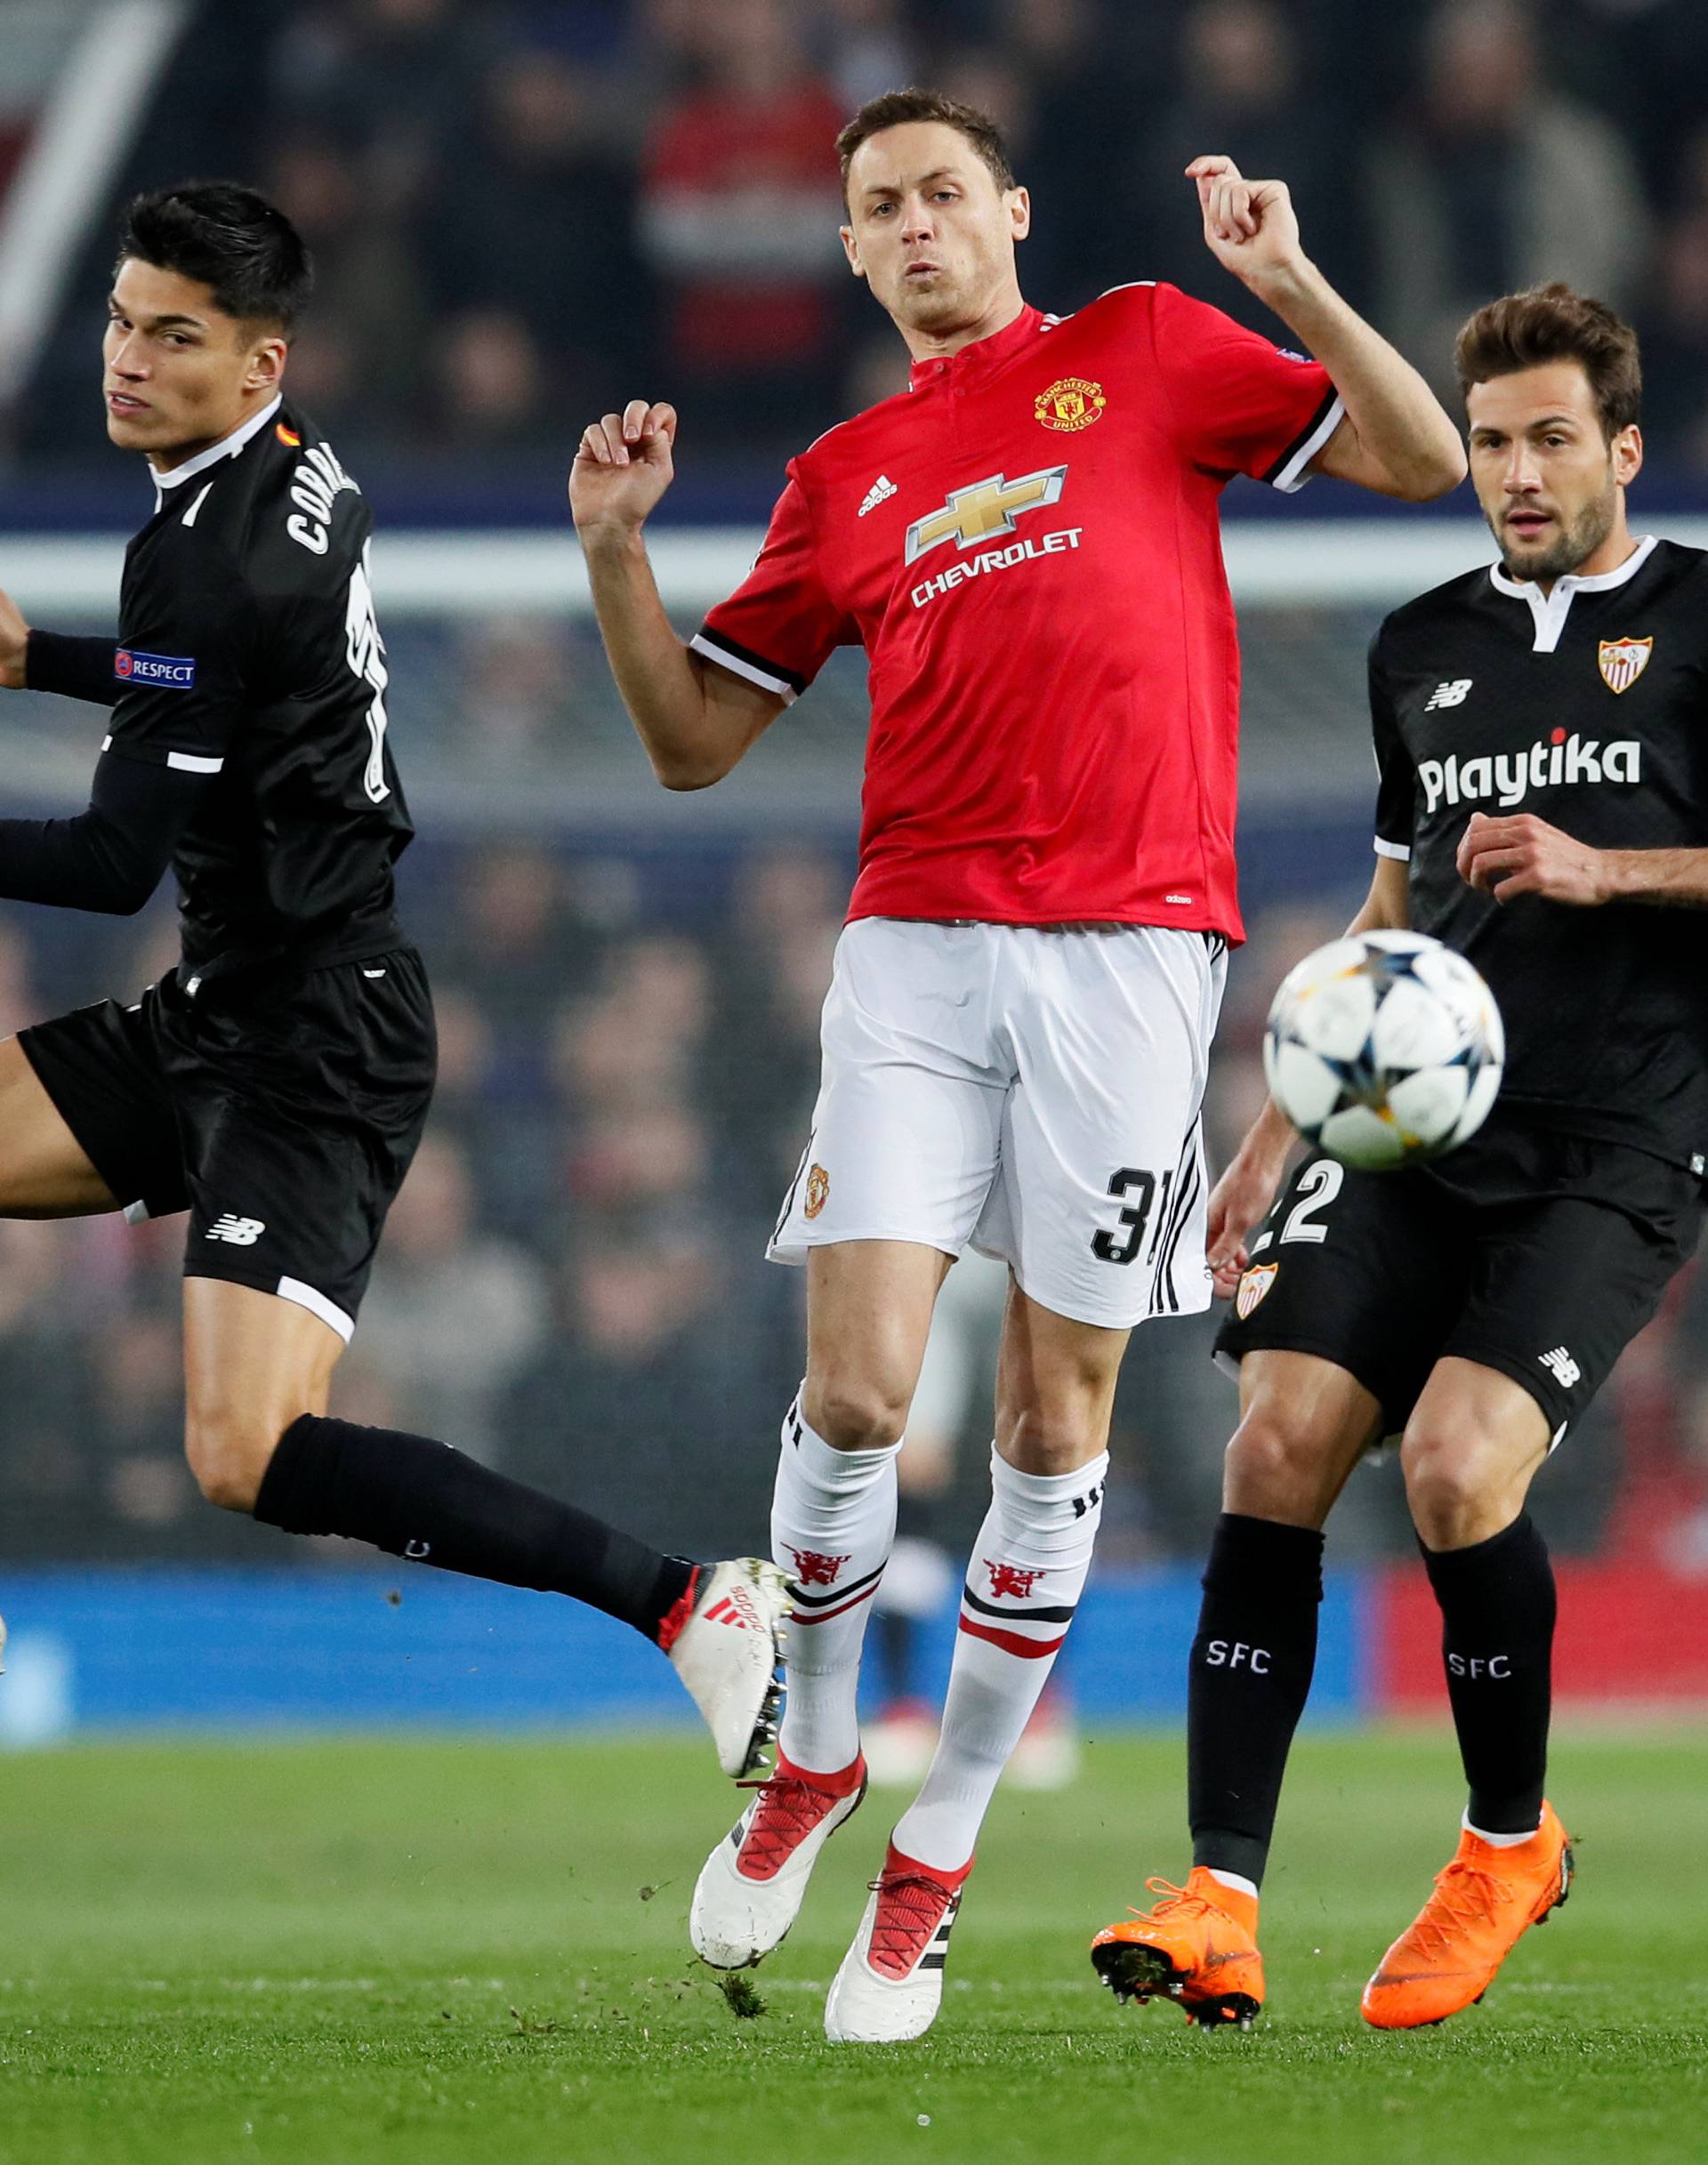 Champions League Round of 16 Second Leg - Manchester United vs Sevilla